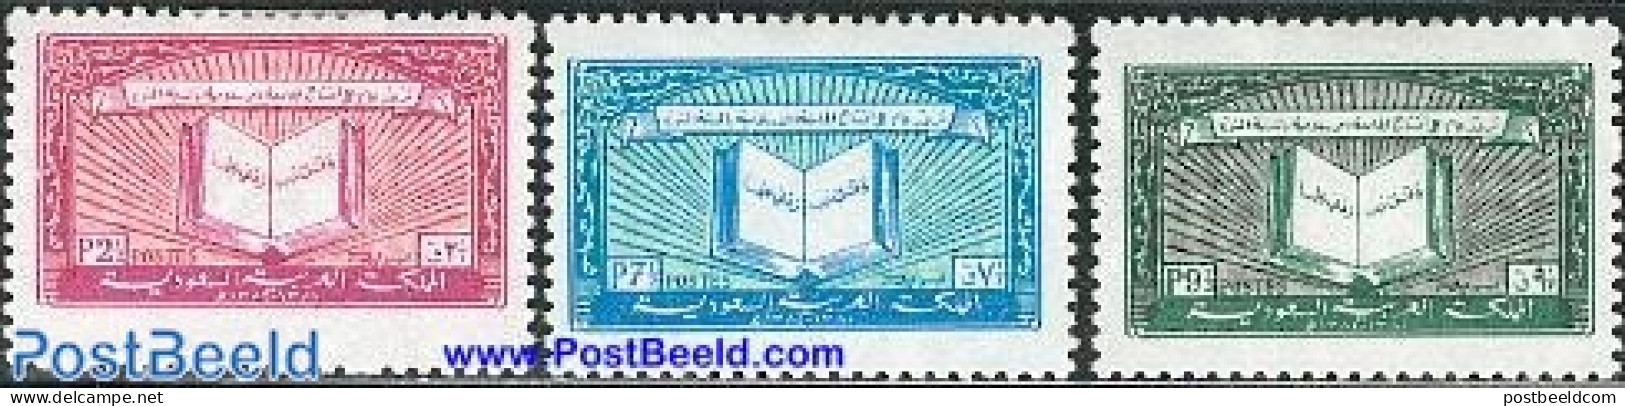 Saudi Arabia 1963 Islamic University Medina 3v, Mint NH, Science - Saudi-Arabien